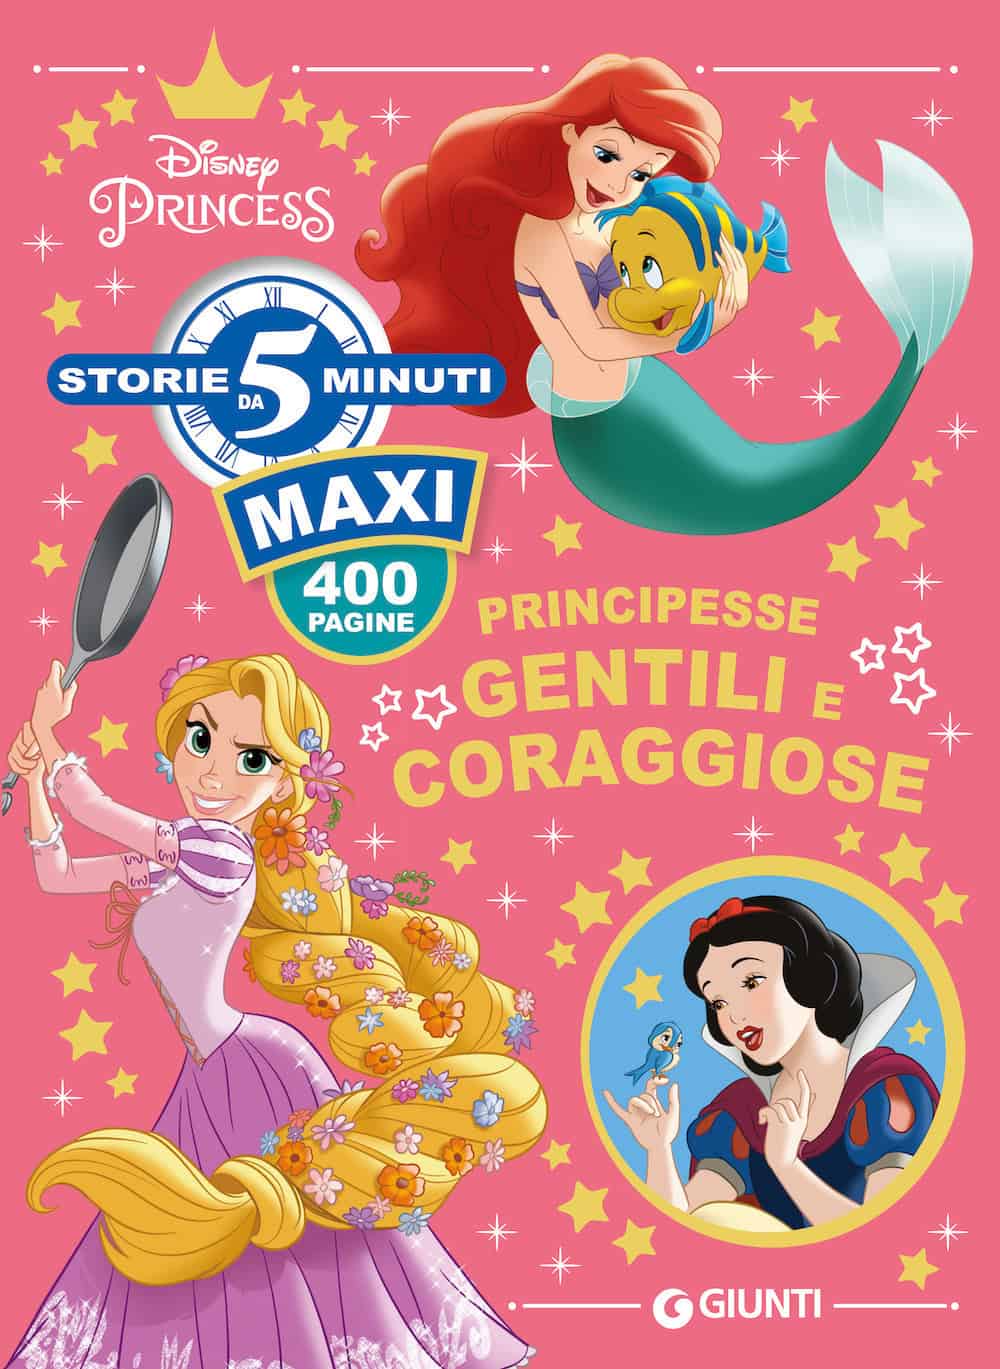 Sticker Storie - Leggi, stacca, attacca: Disney Princess